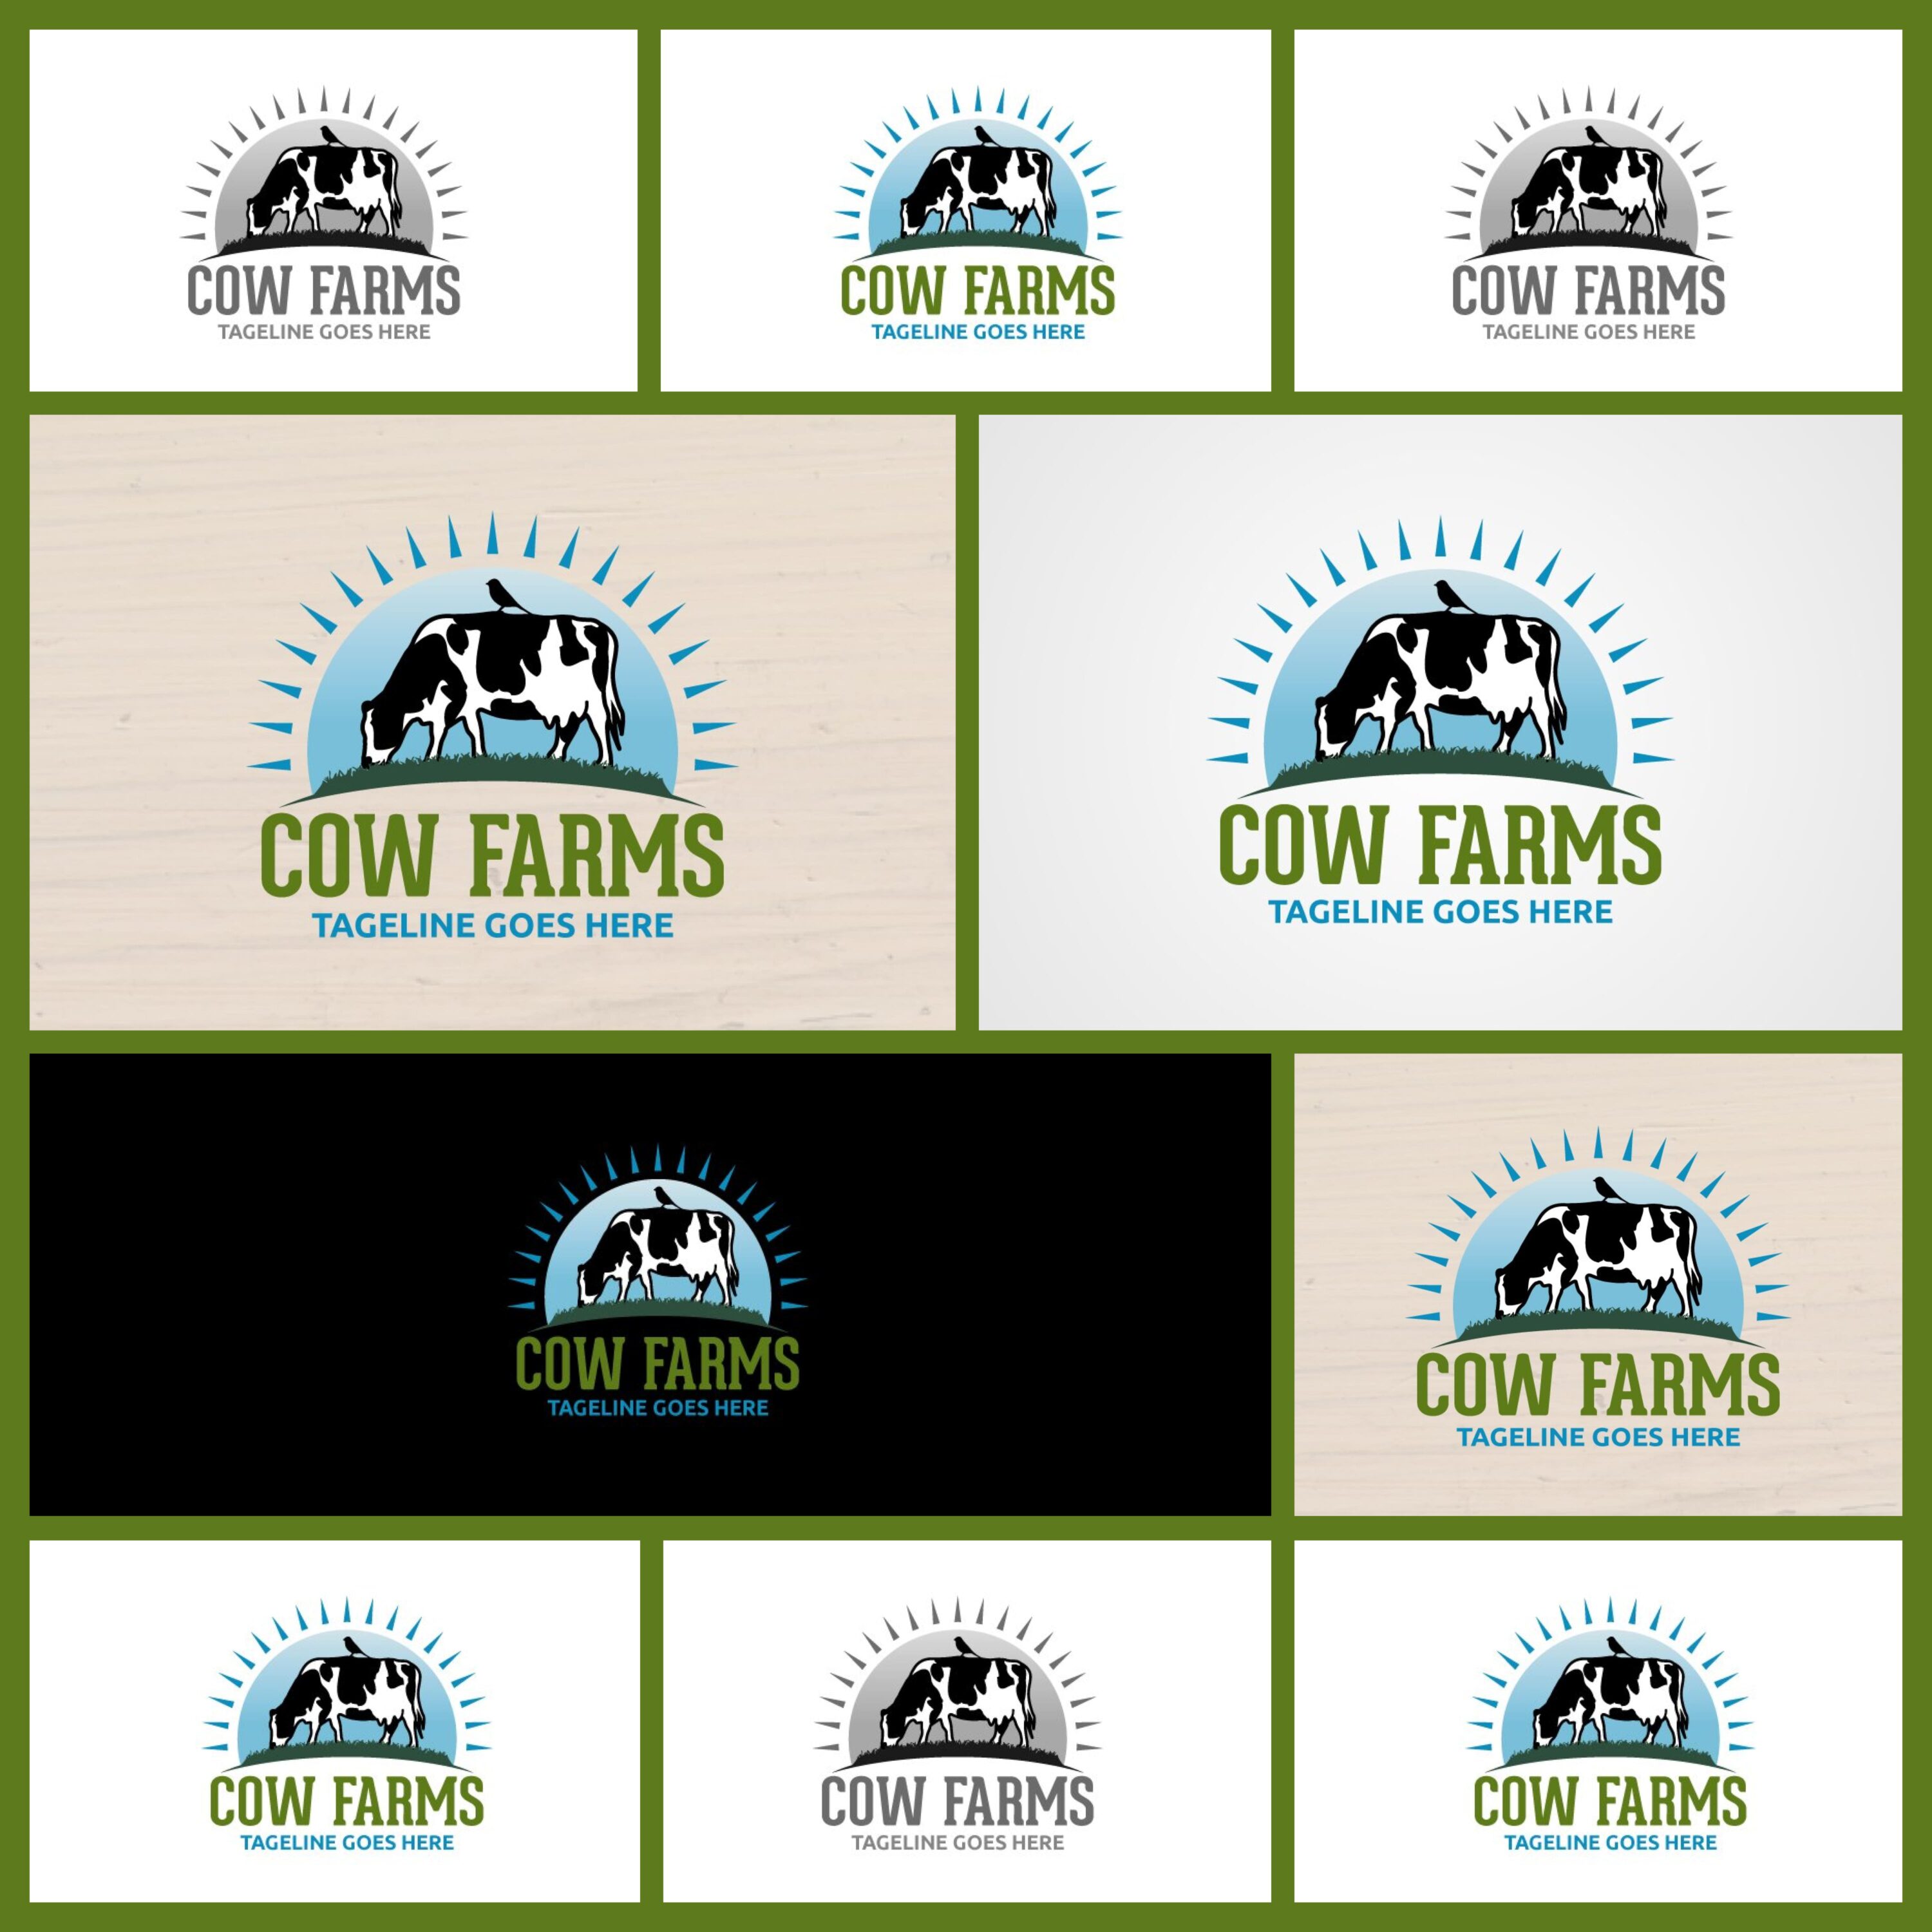 Cow Farms cover.